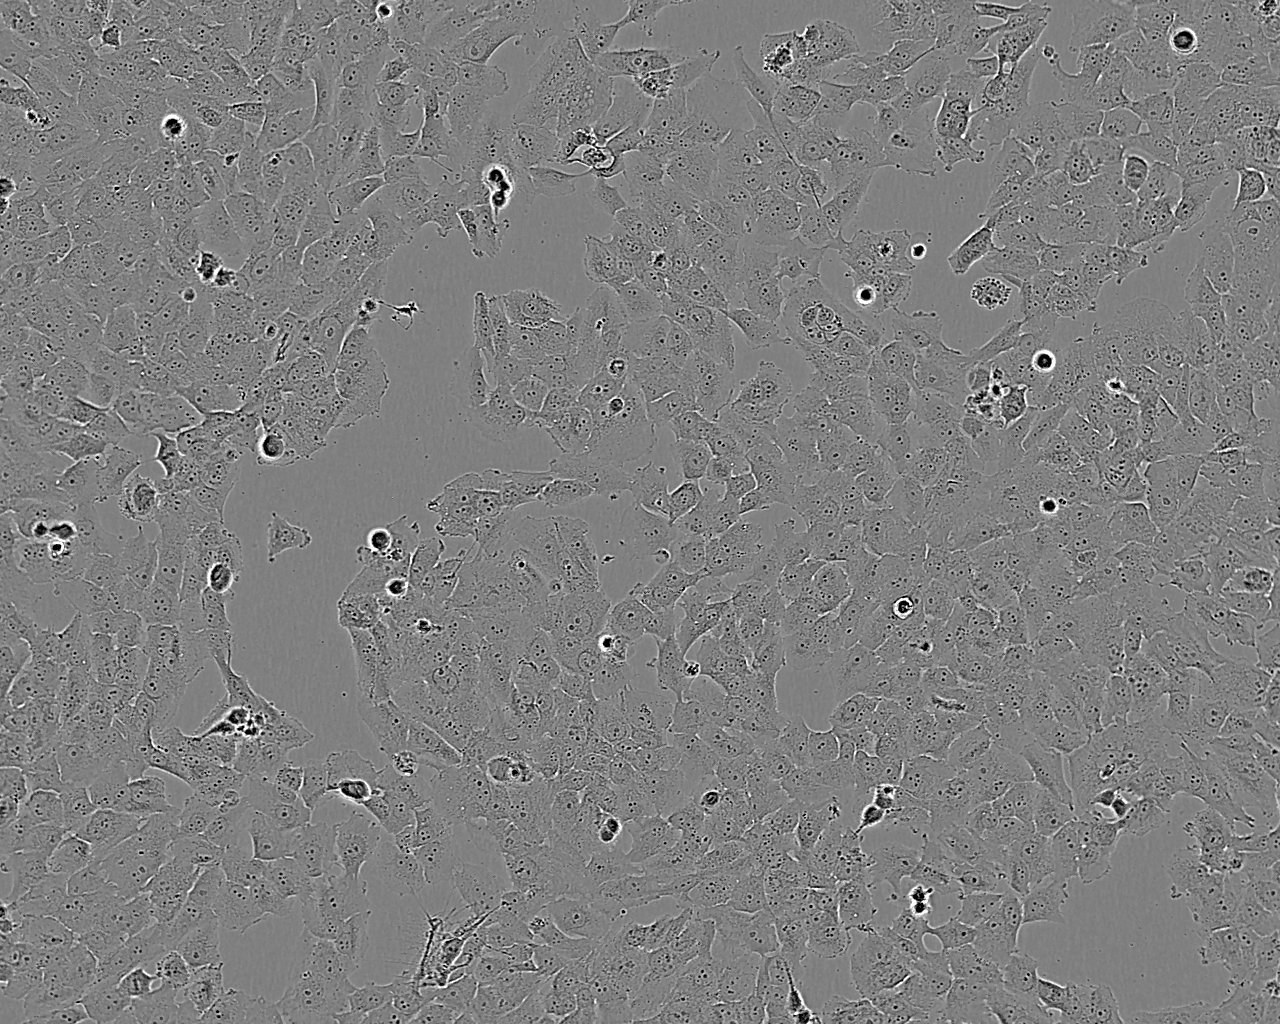 SNU-C1 epithelioid cells人结肠癌细胞系,SNU-C1 epithelioid cells